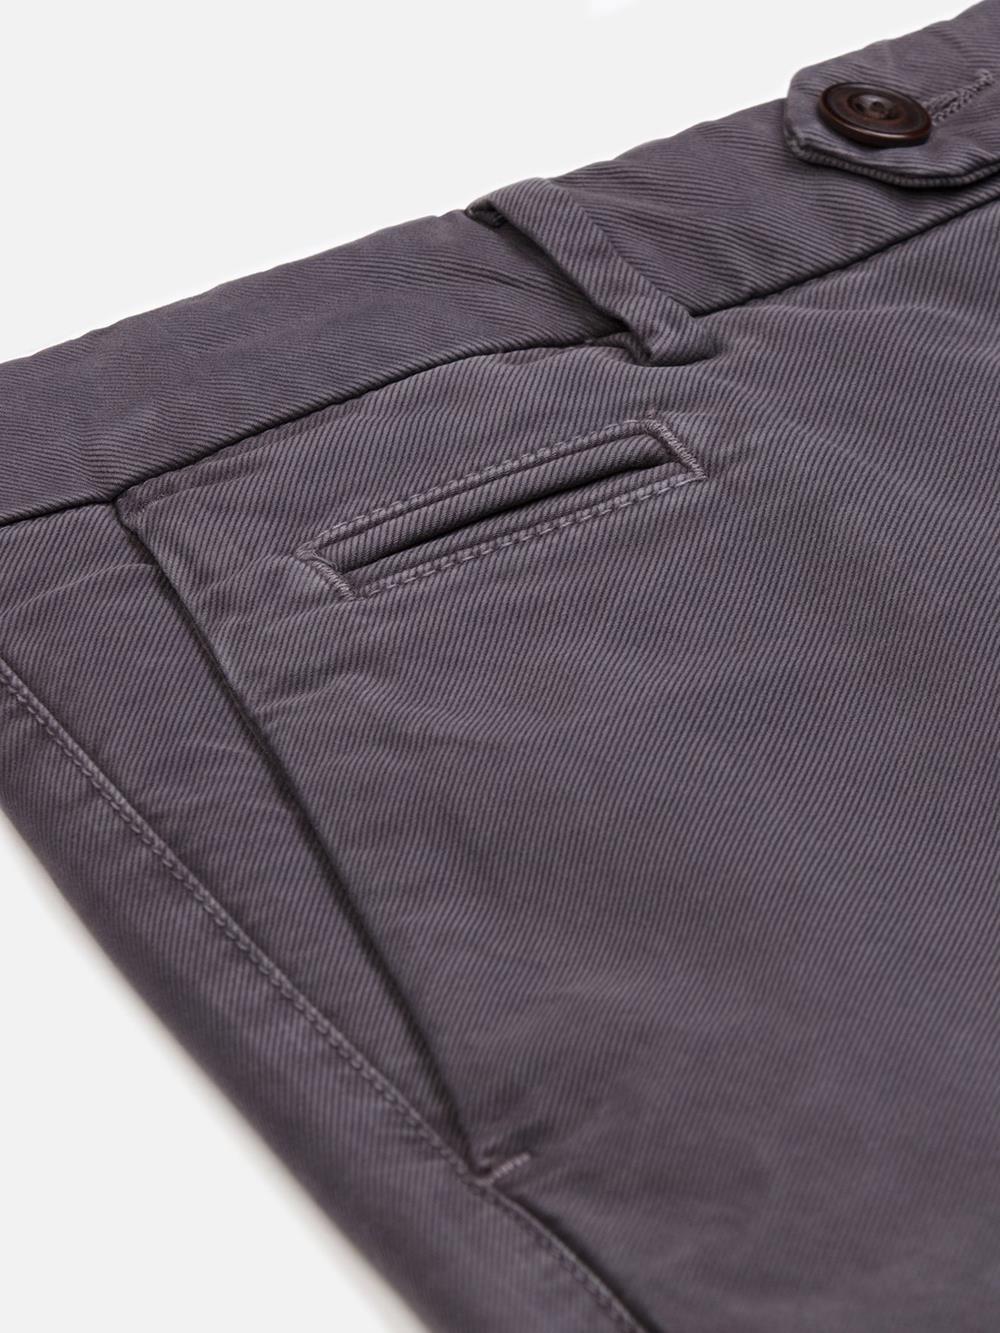 Pantalon chino carbone